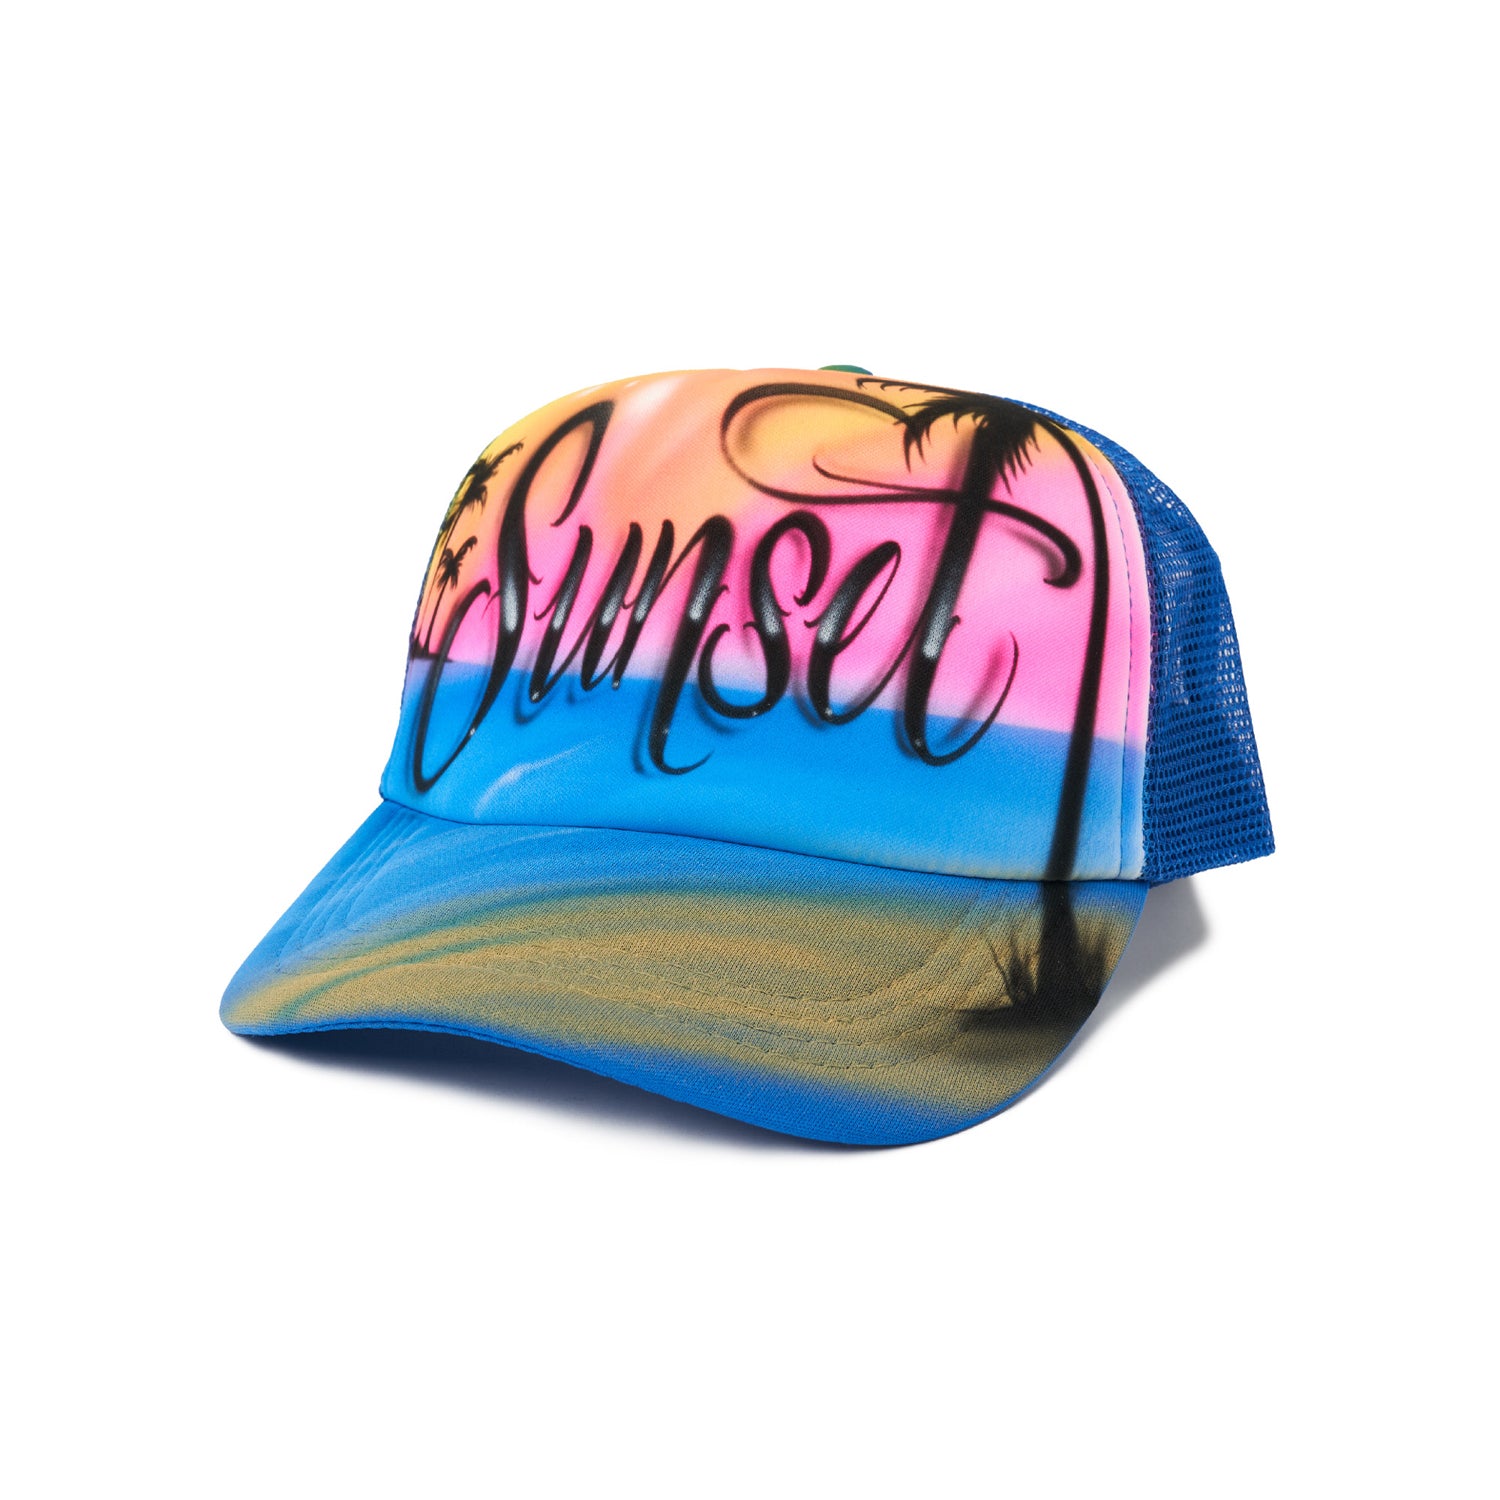 Airbrush Trucker Hat 05, Blue